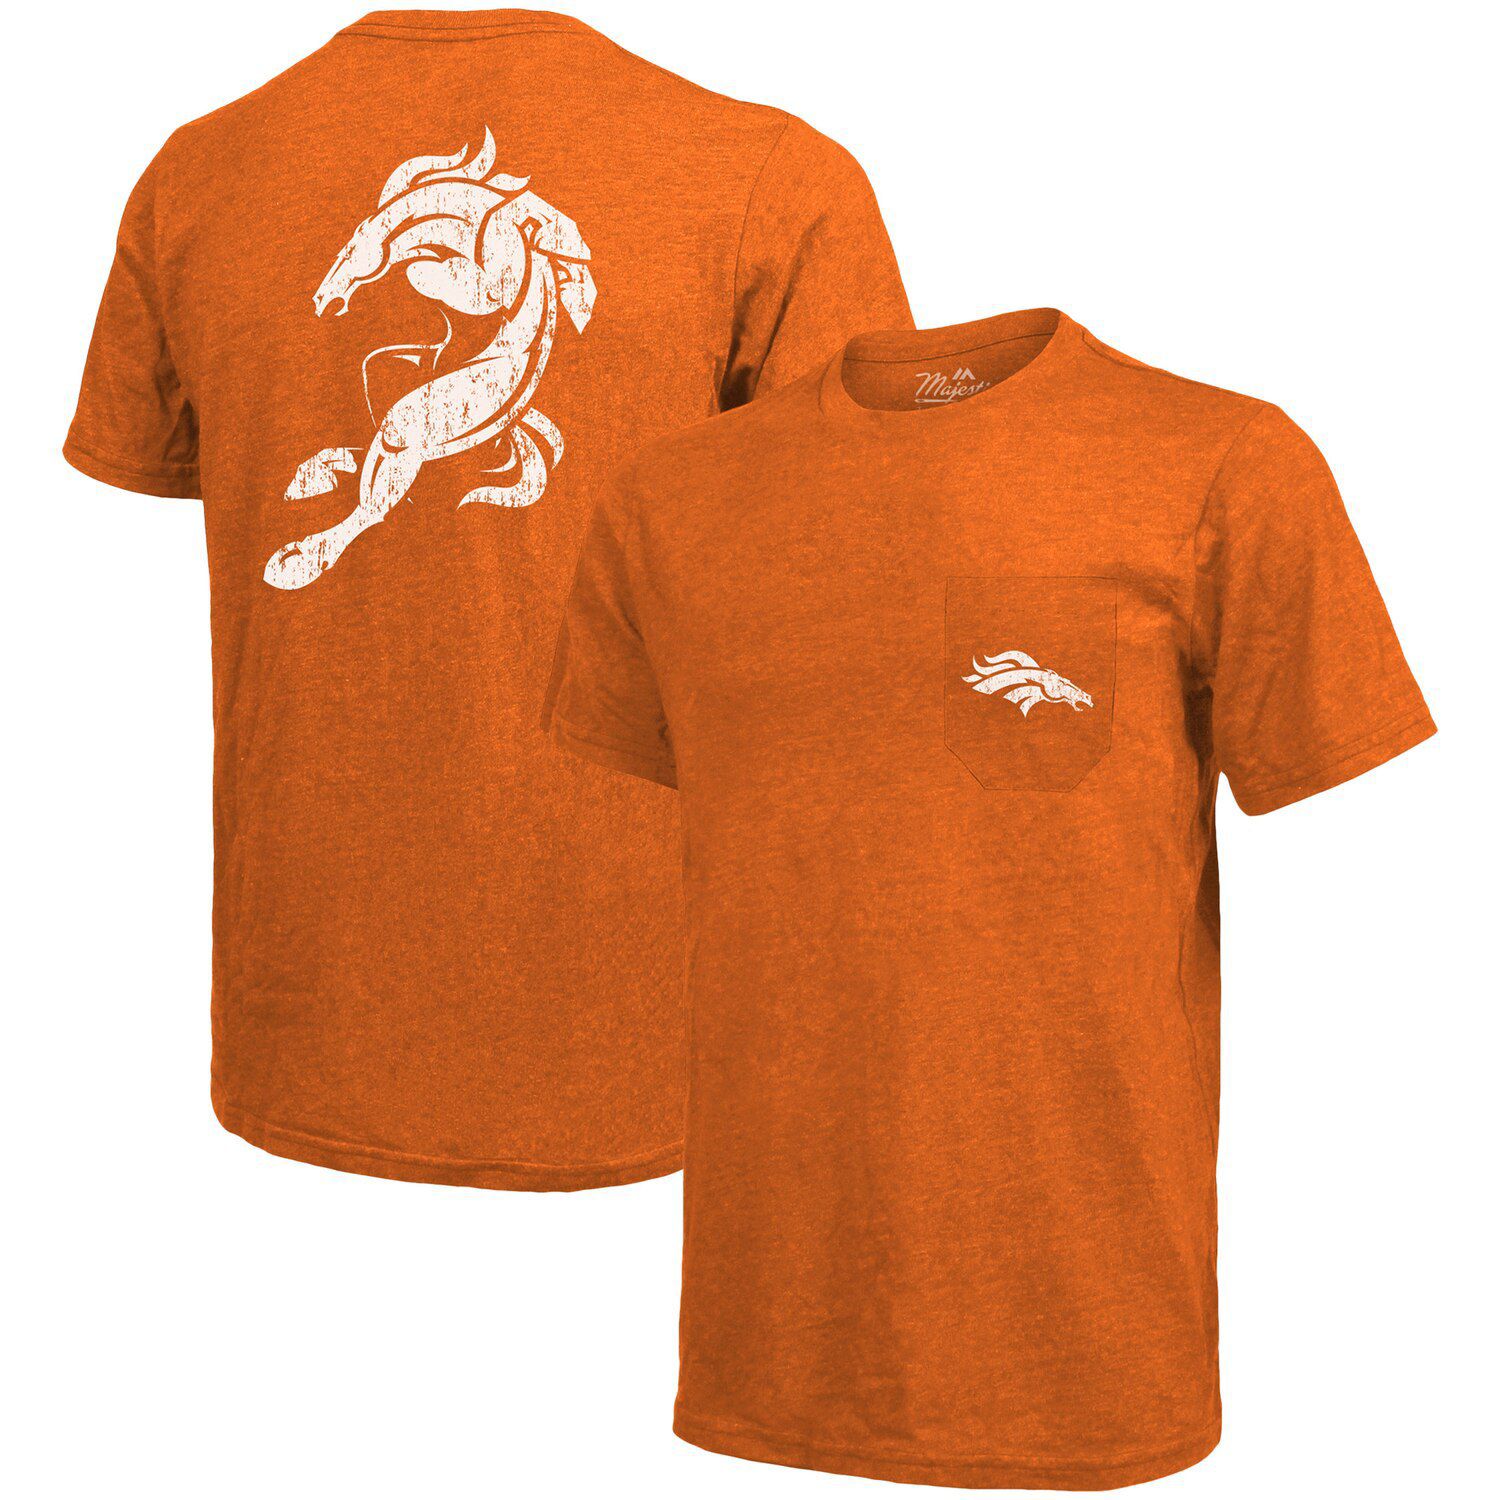 Футболка с карманами Tri-Blend Denver Broncos Majestic Threads - оранжевый футболка с карманами tri blend new york jets threads меланжево зеленый majestic